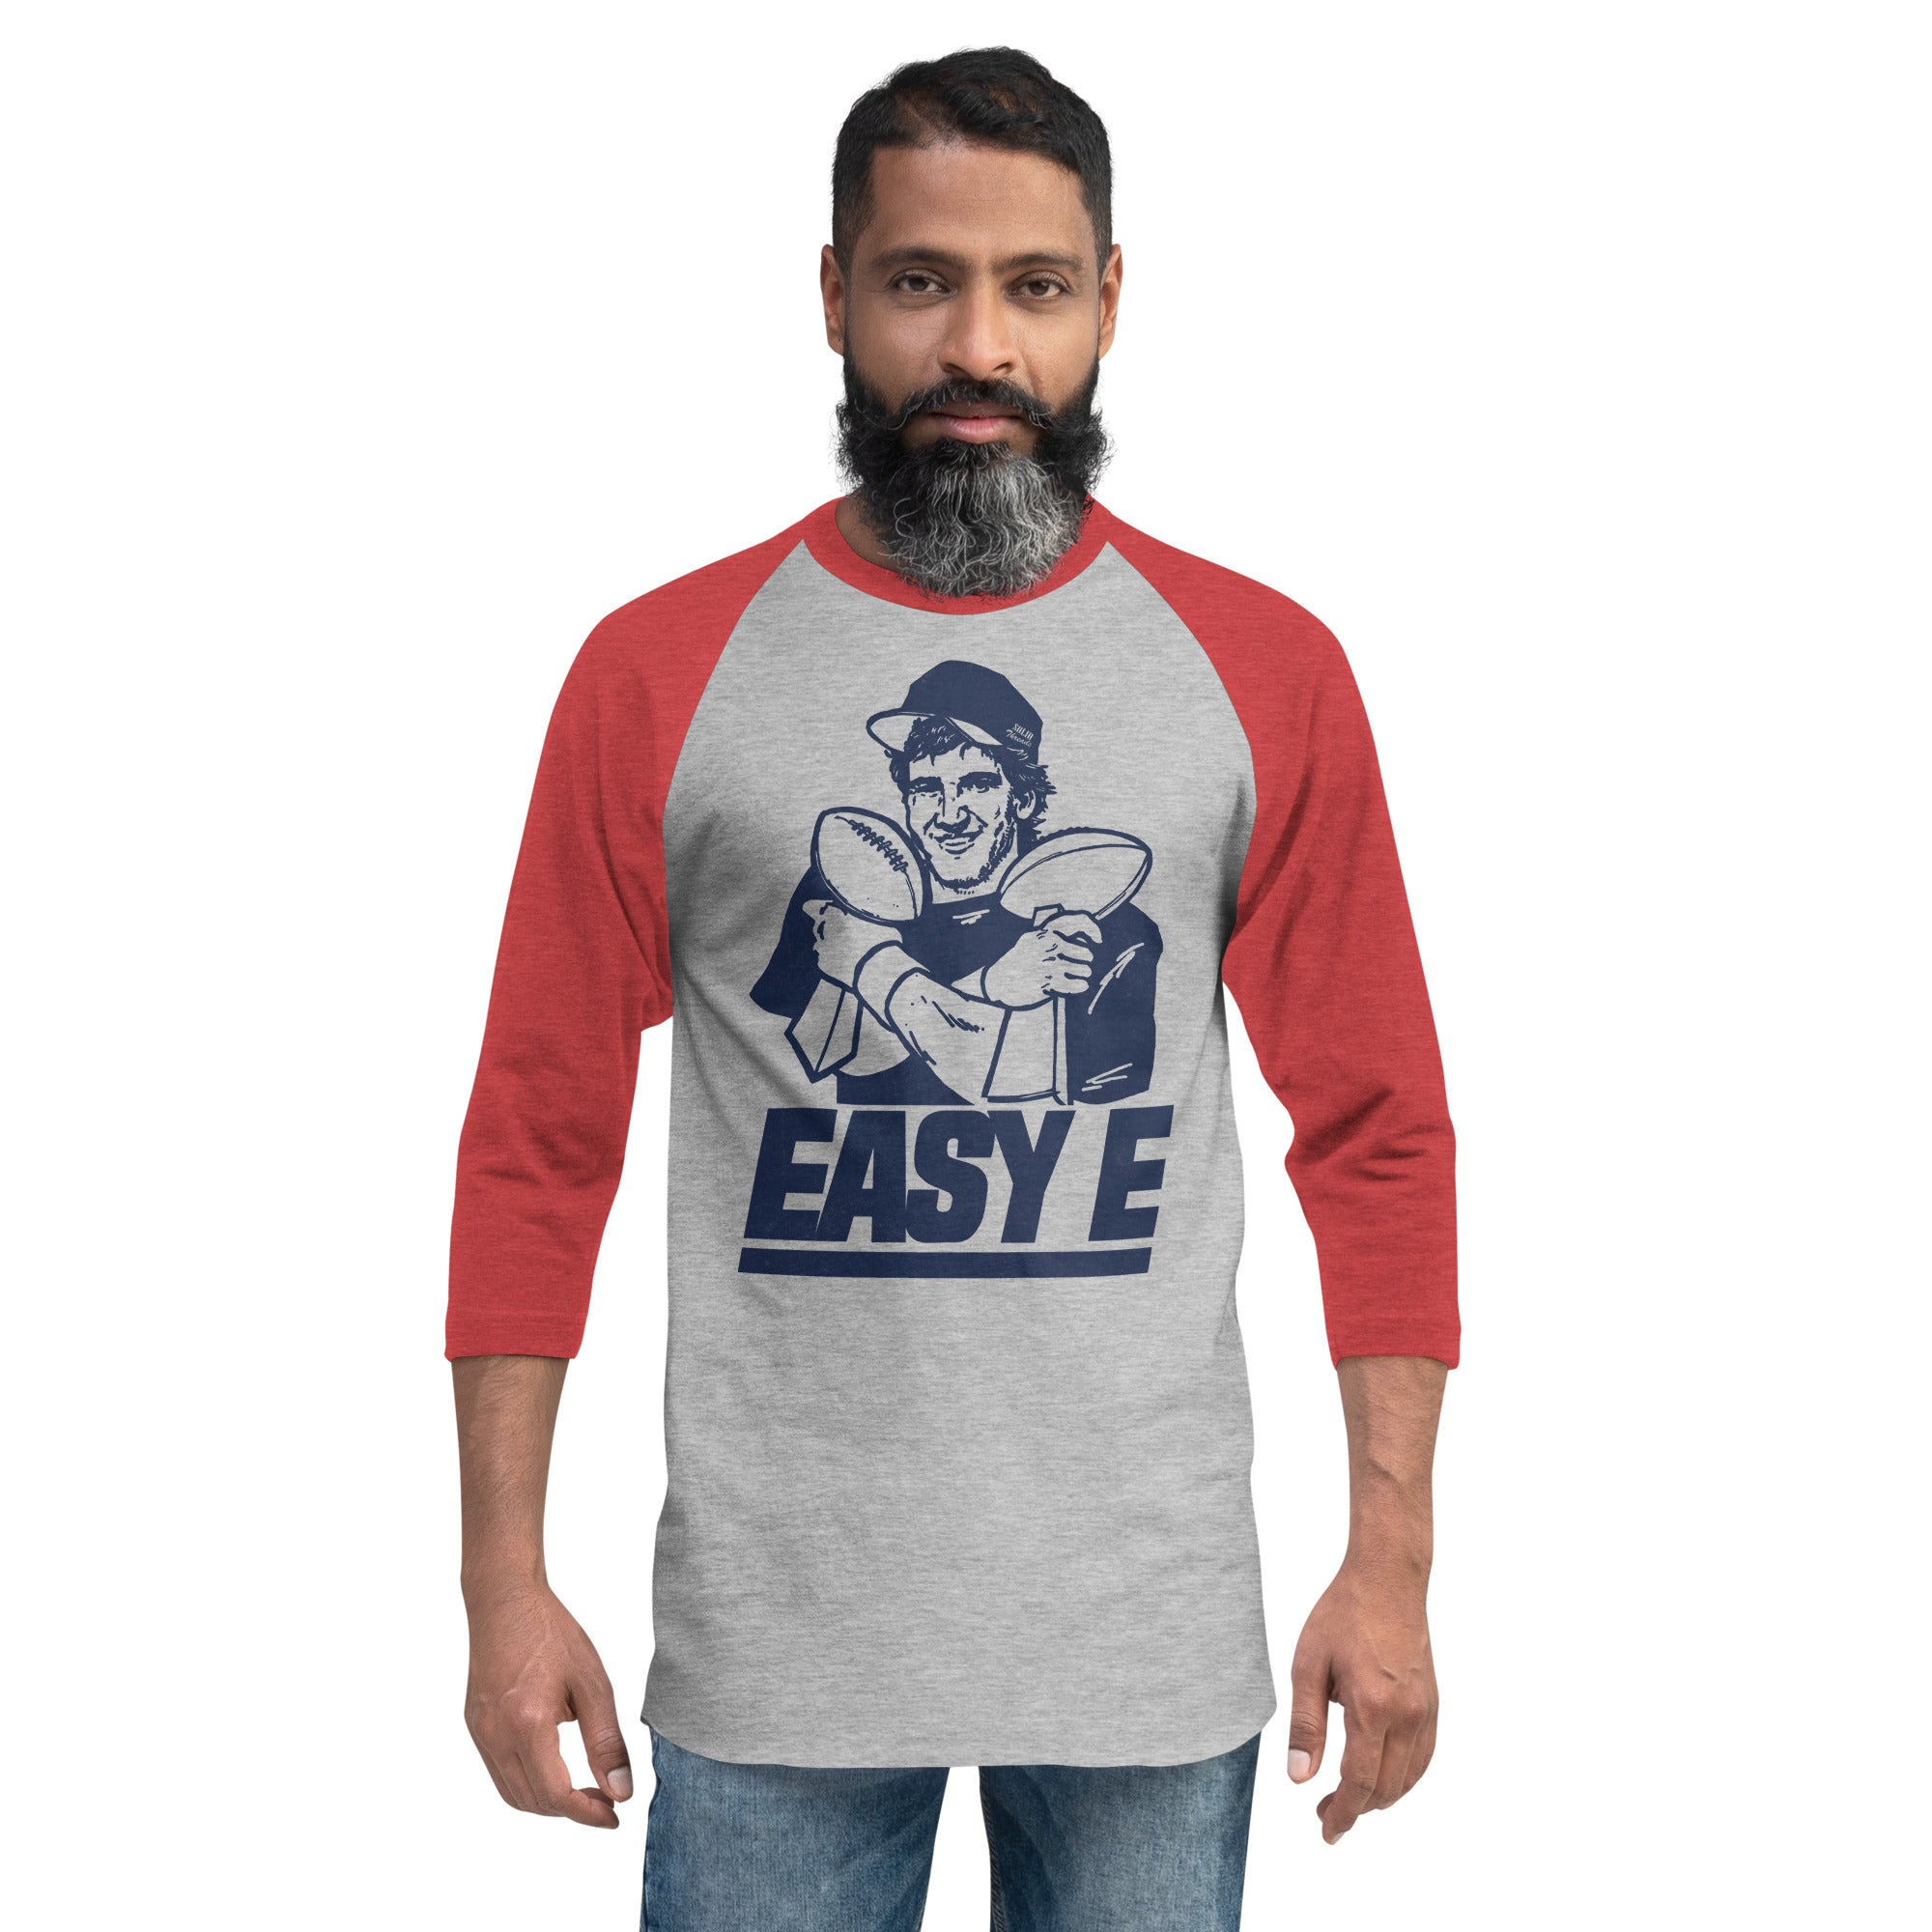 Easy E Vintage Sports Graphic Raglan Tee | Funny NY Giants Grey Baseball T-shirt | Solid Threads